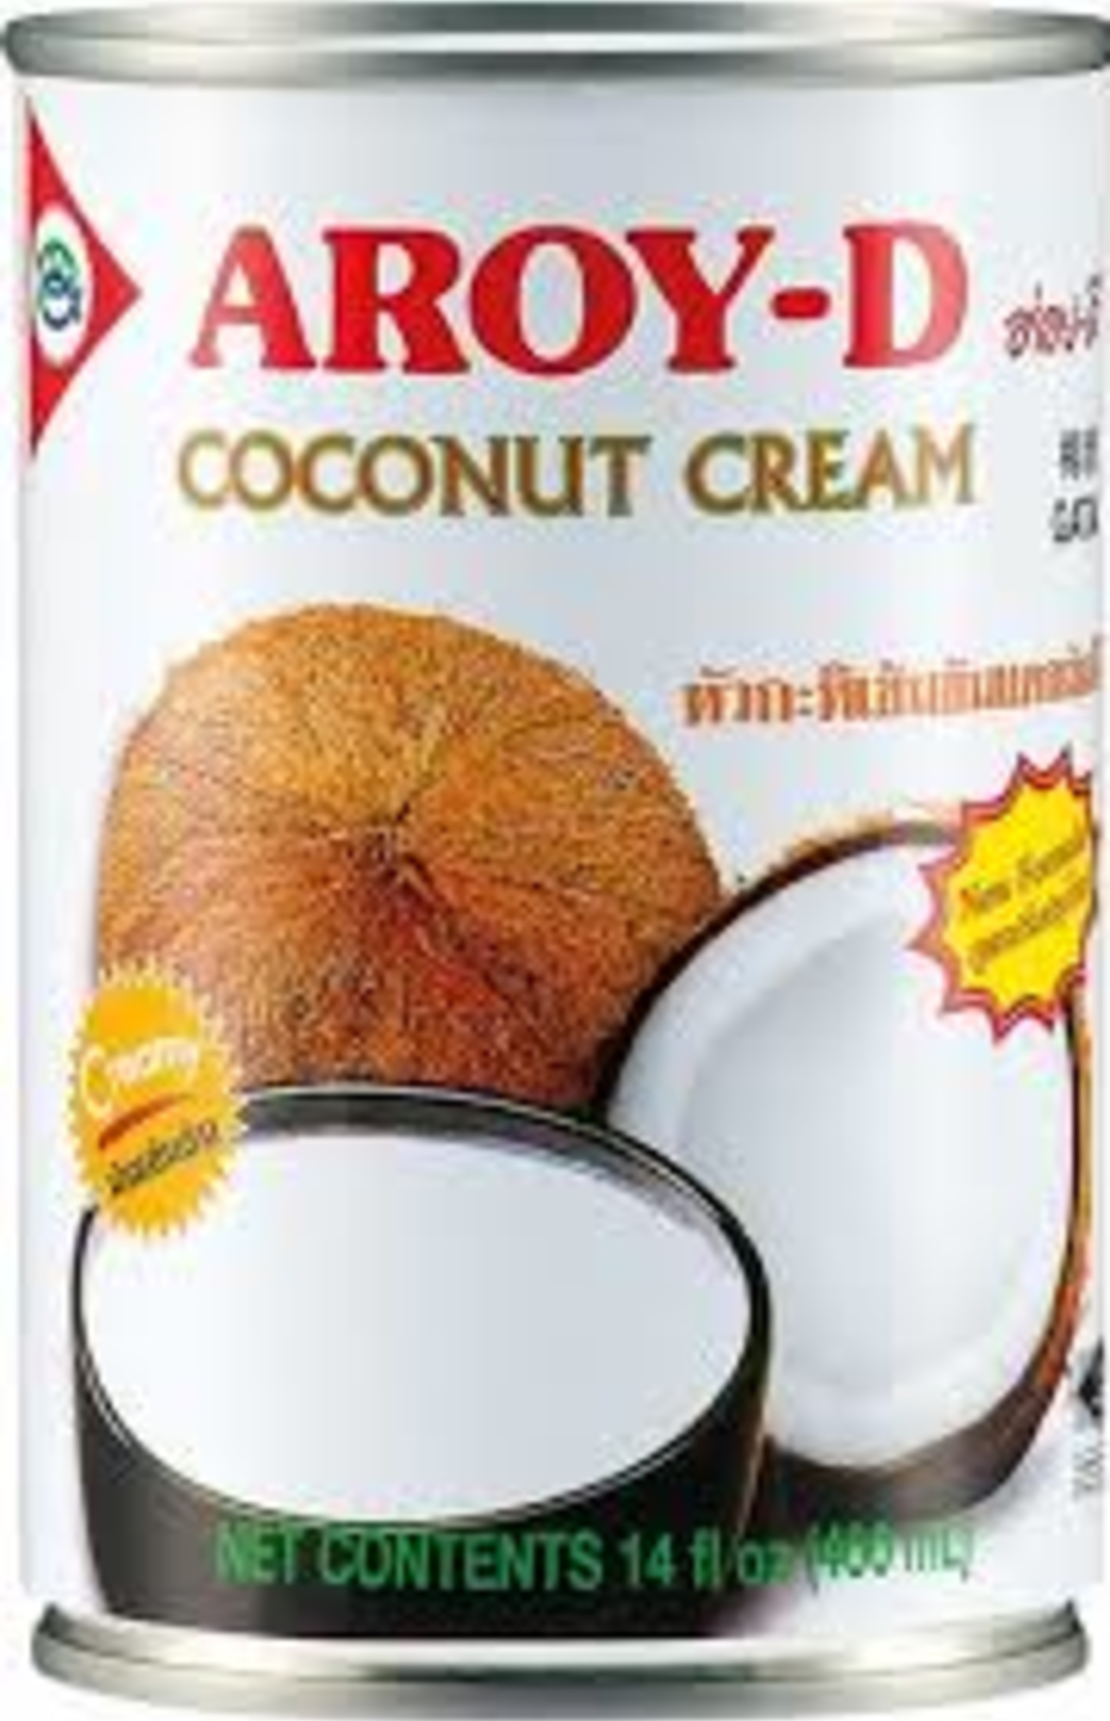 GATA Aroy - D Coconut Cream Creamy 400ml